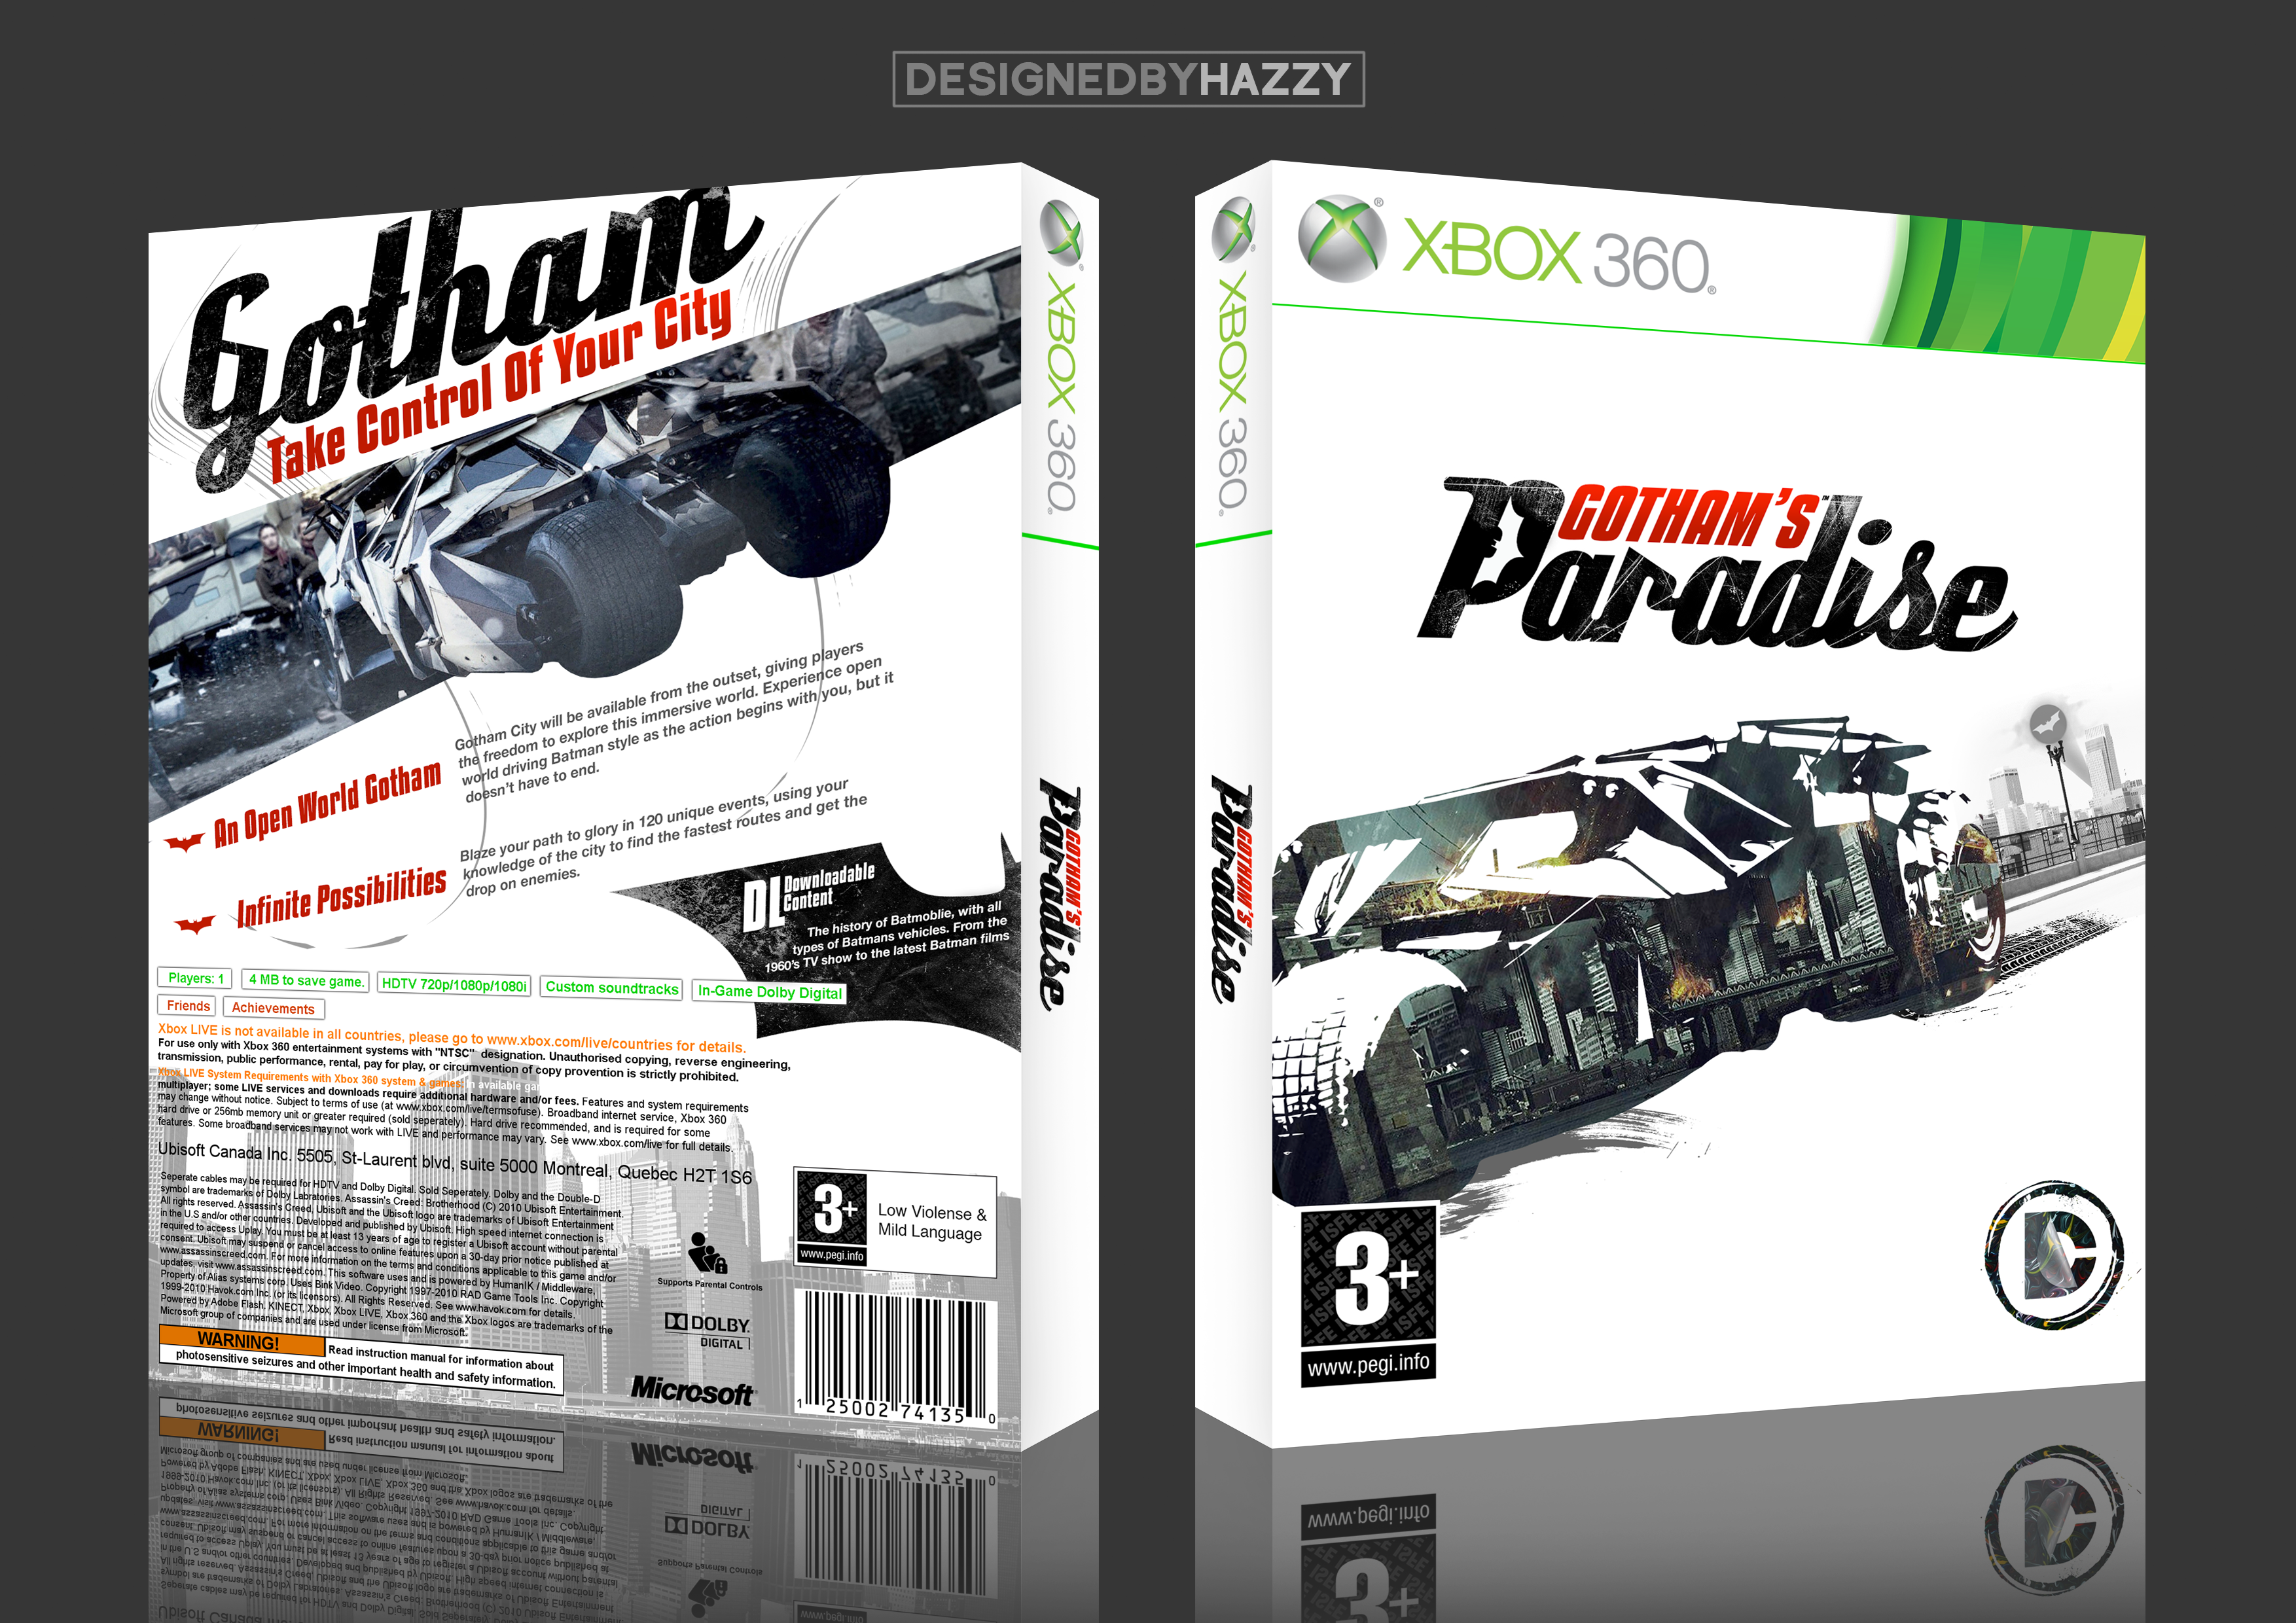 Gotham's Paradise box cover